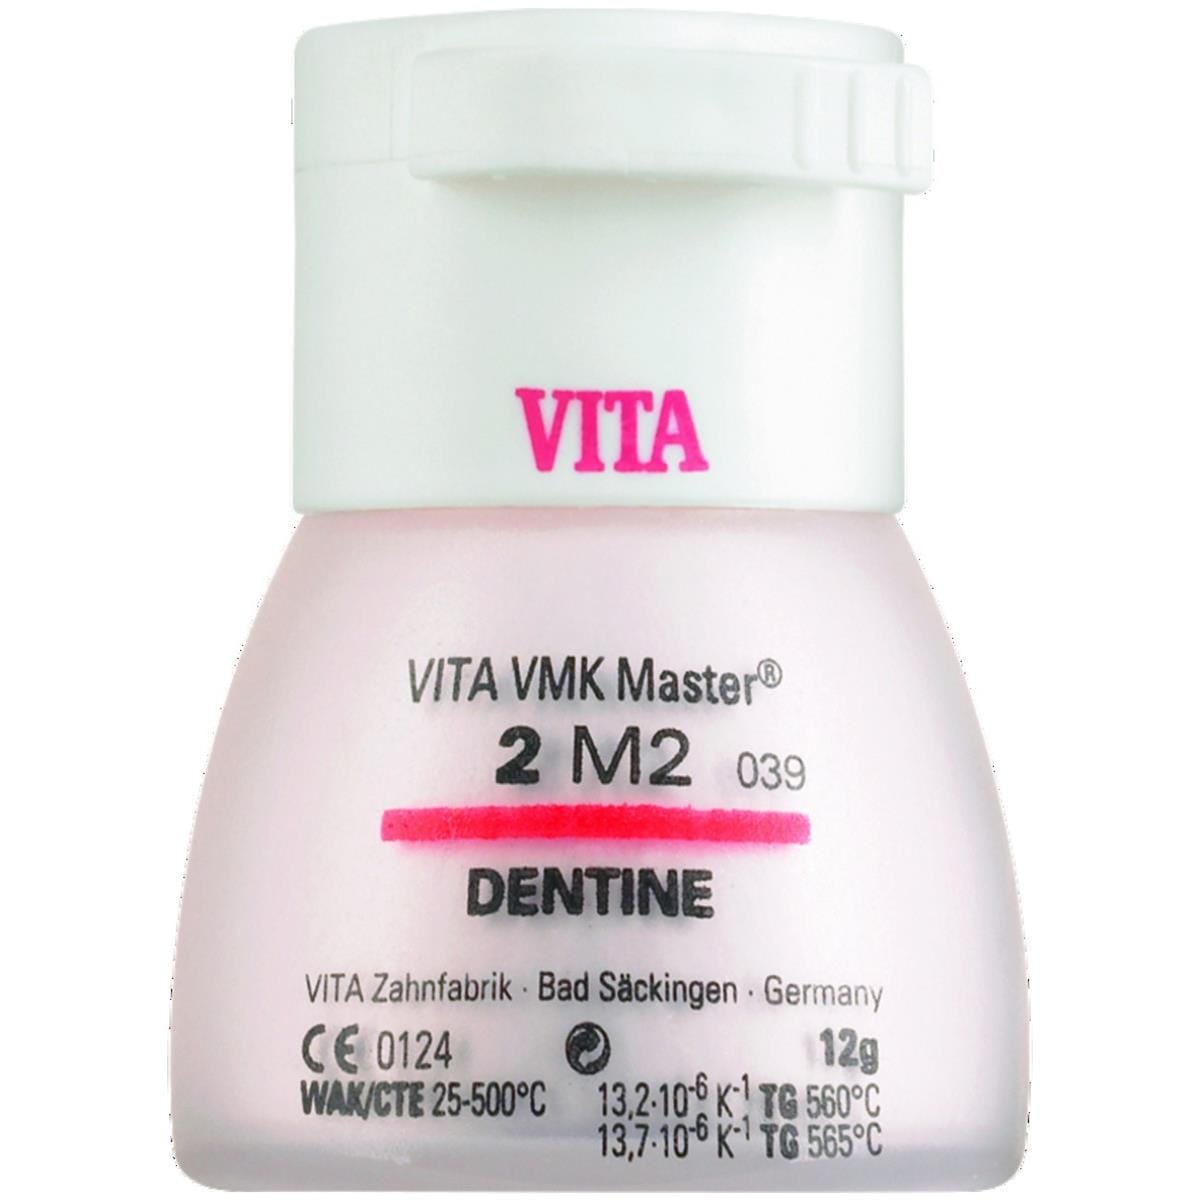 VMK Master VITA - Dentine - 2L2,5 - Le flacon de 12 g